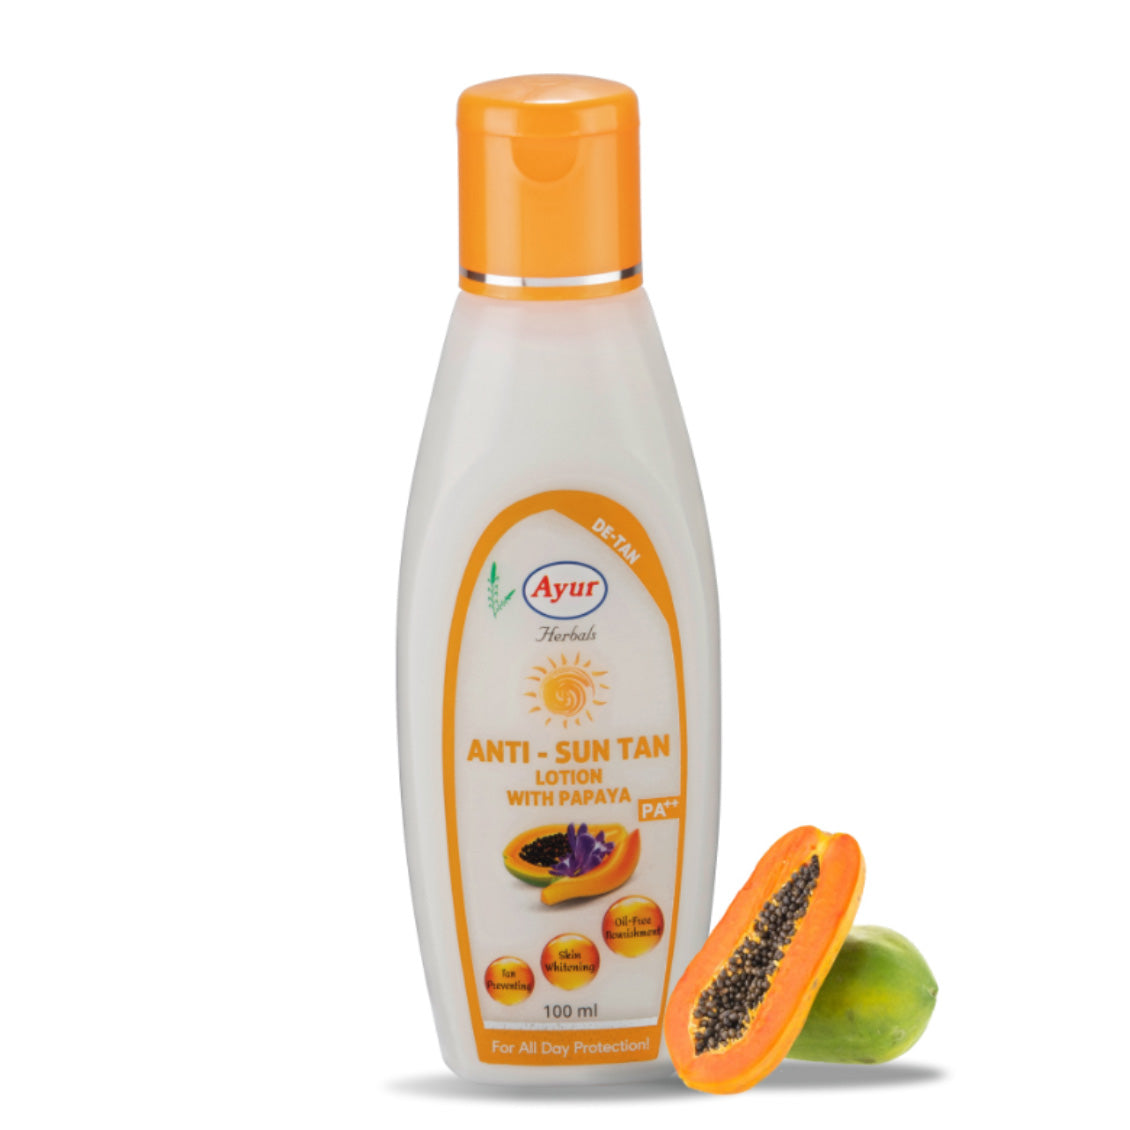 Anti-sun tan lotion with papaya